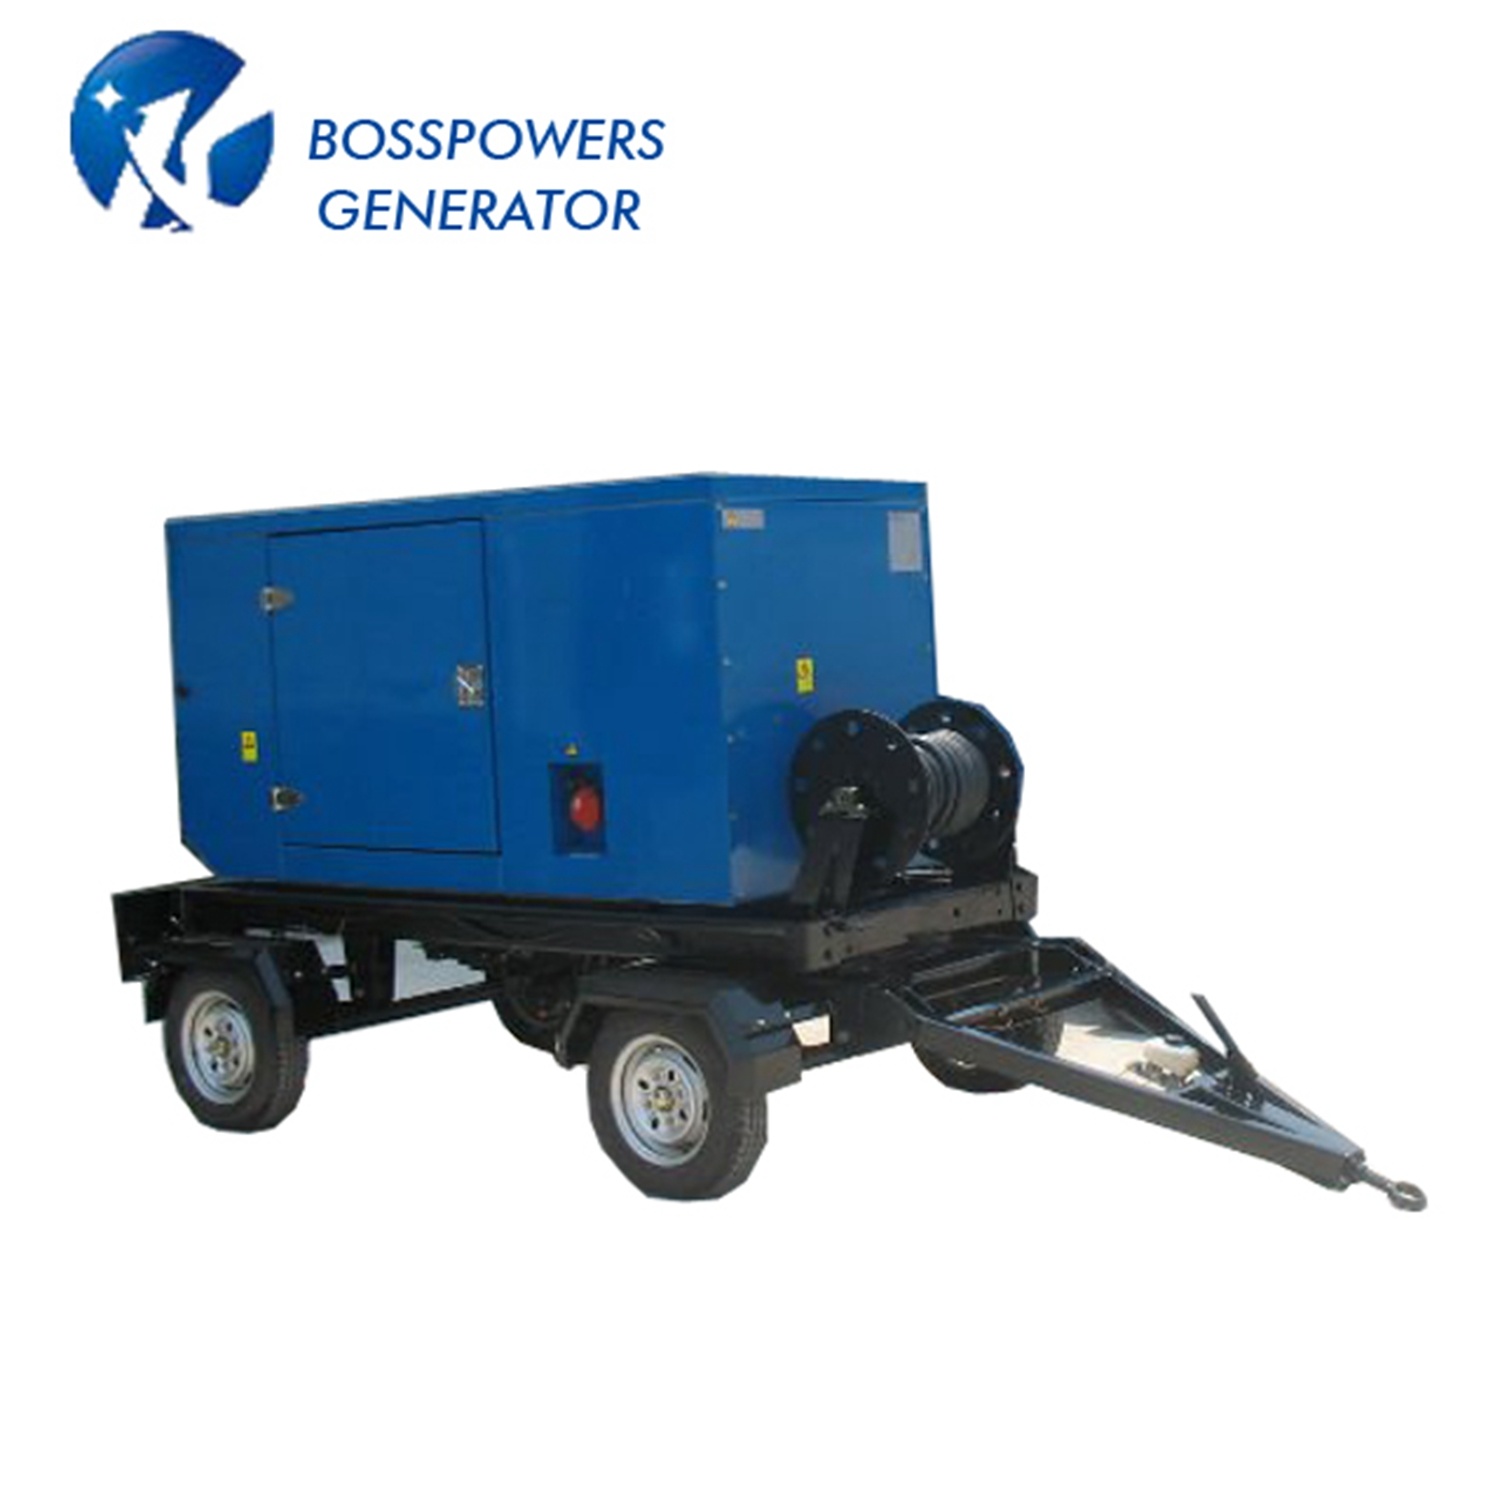 100kw 125kVA Outdoor Use Rainproof Portable Diesel Generators with Four-Wheel